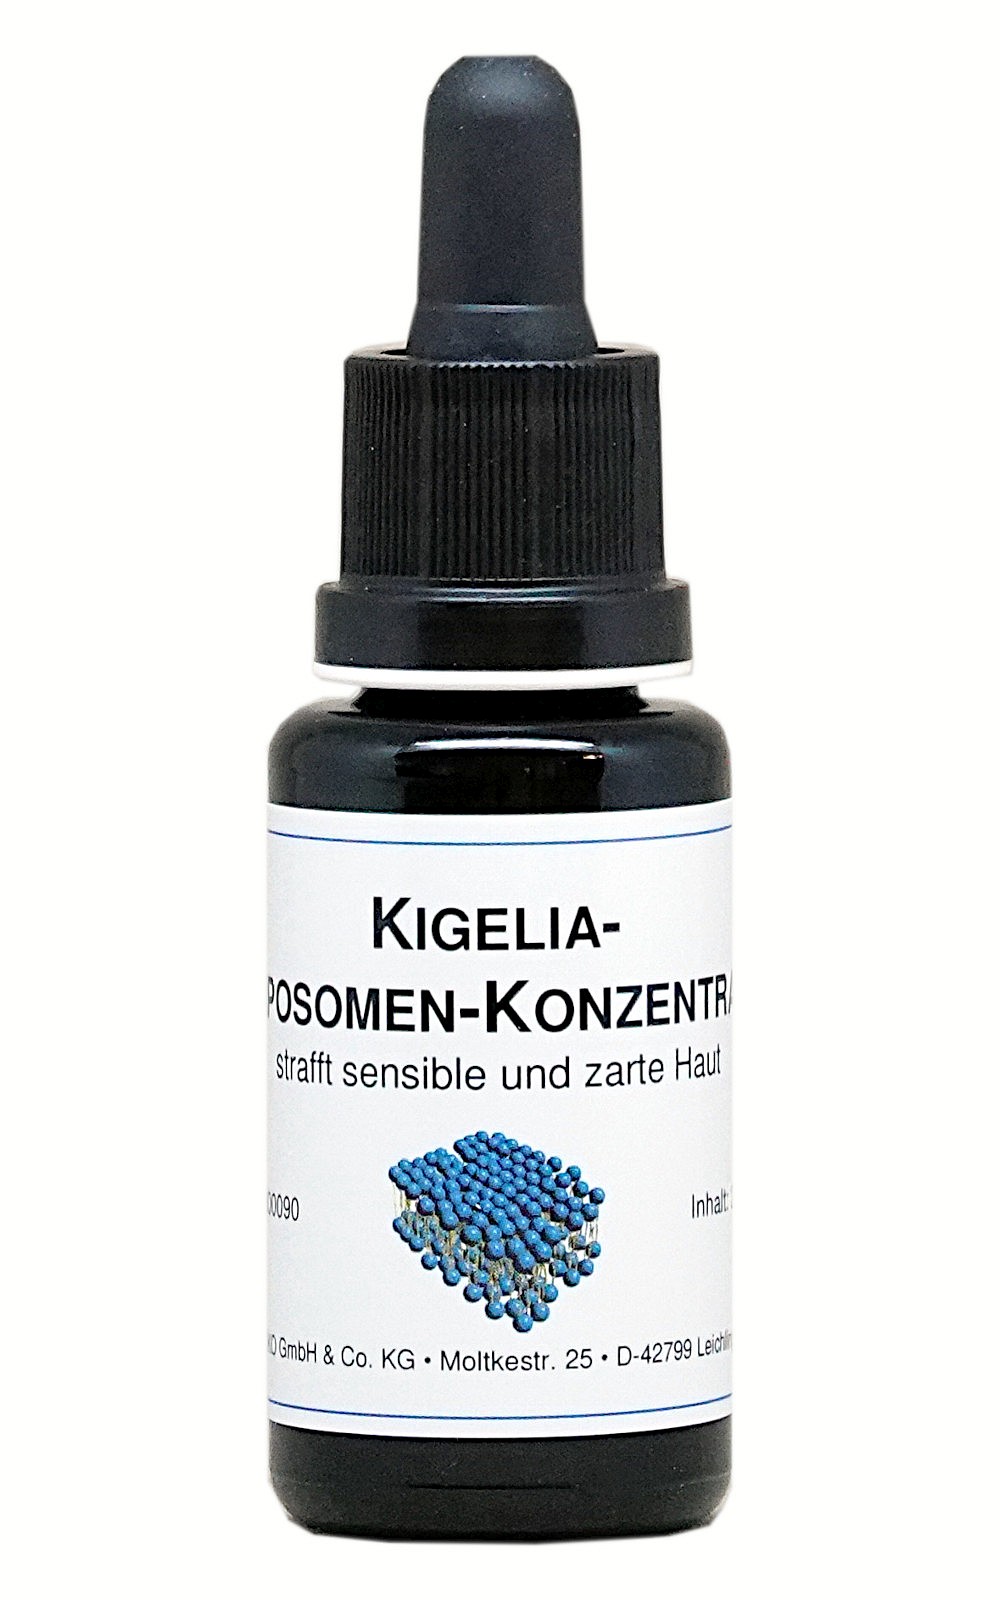 dermaviduals Kigelia-Liposomen-Konzentrat_20ml